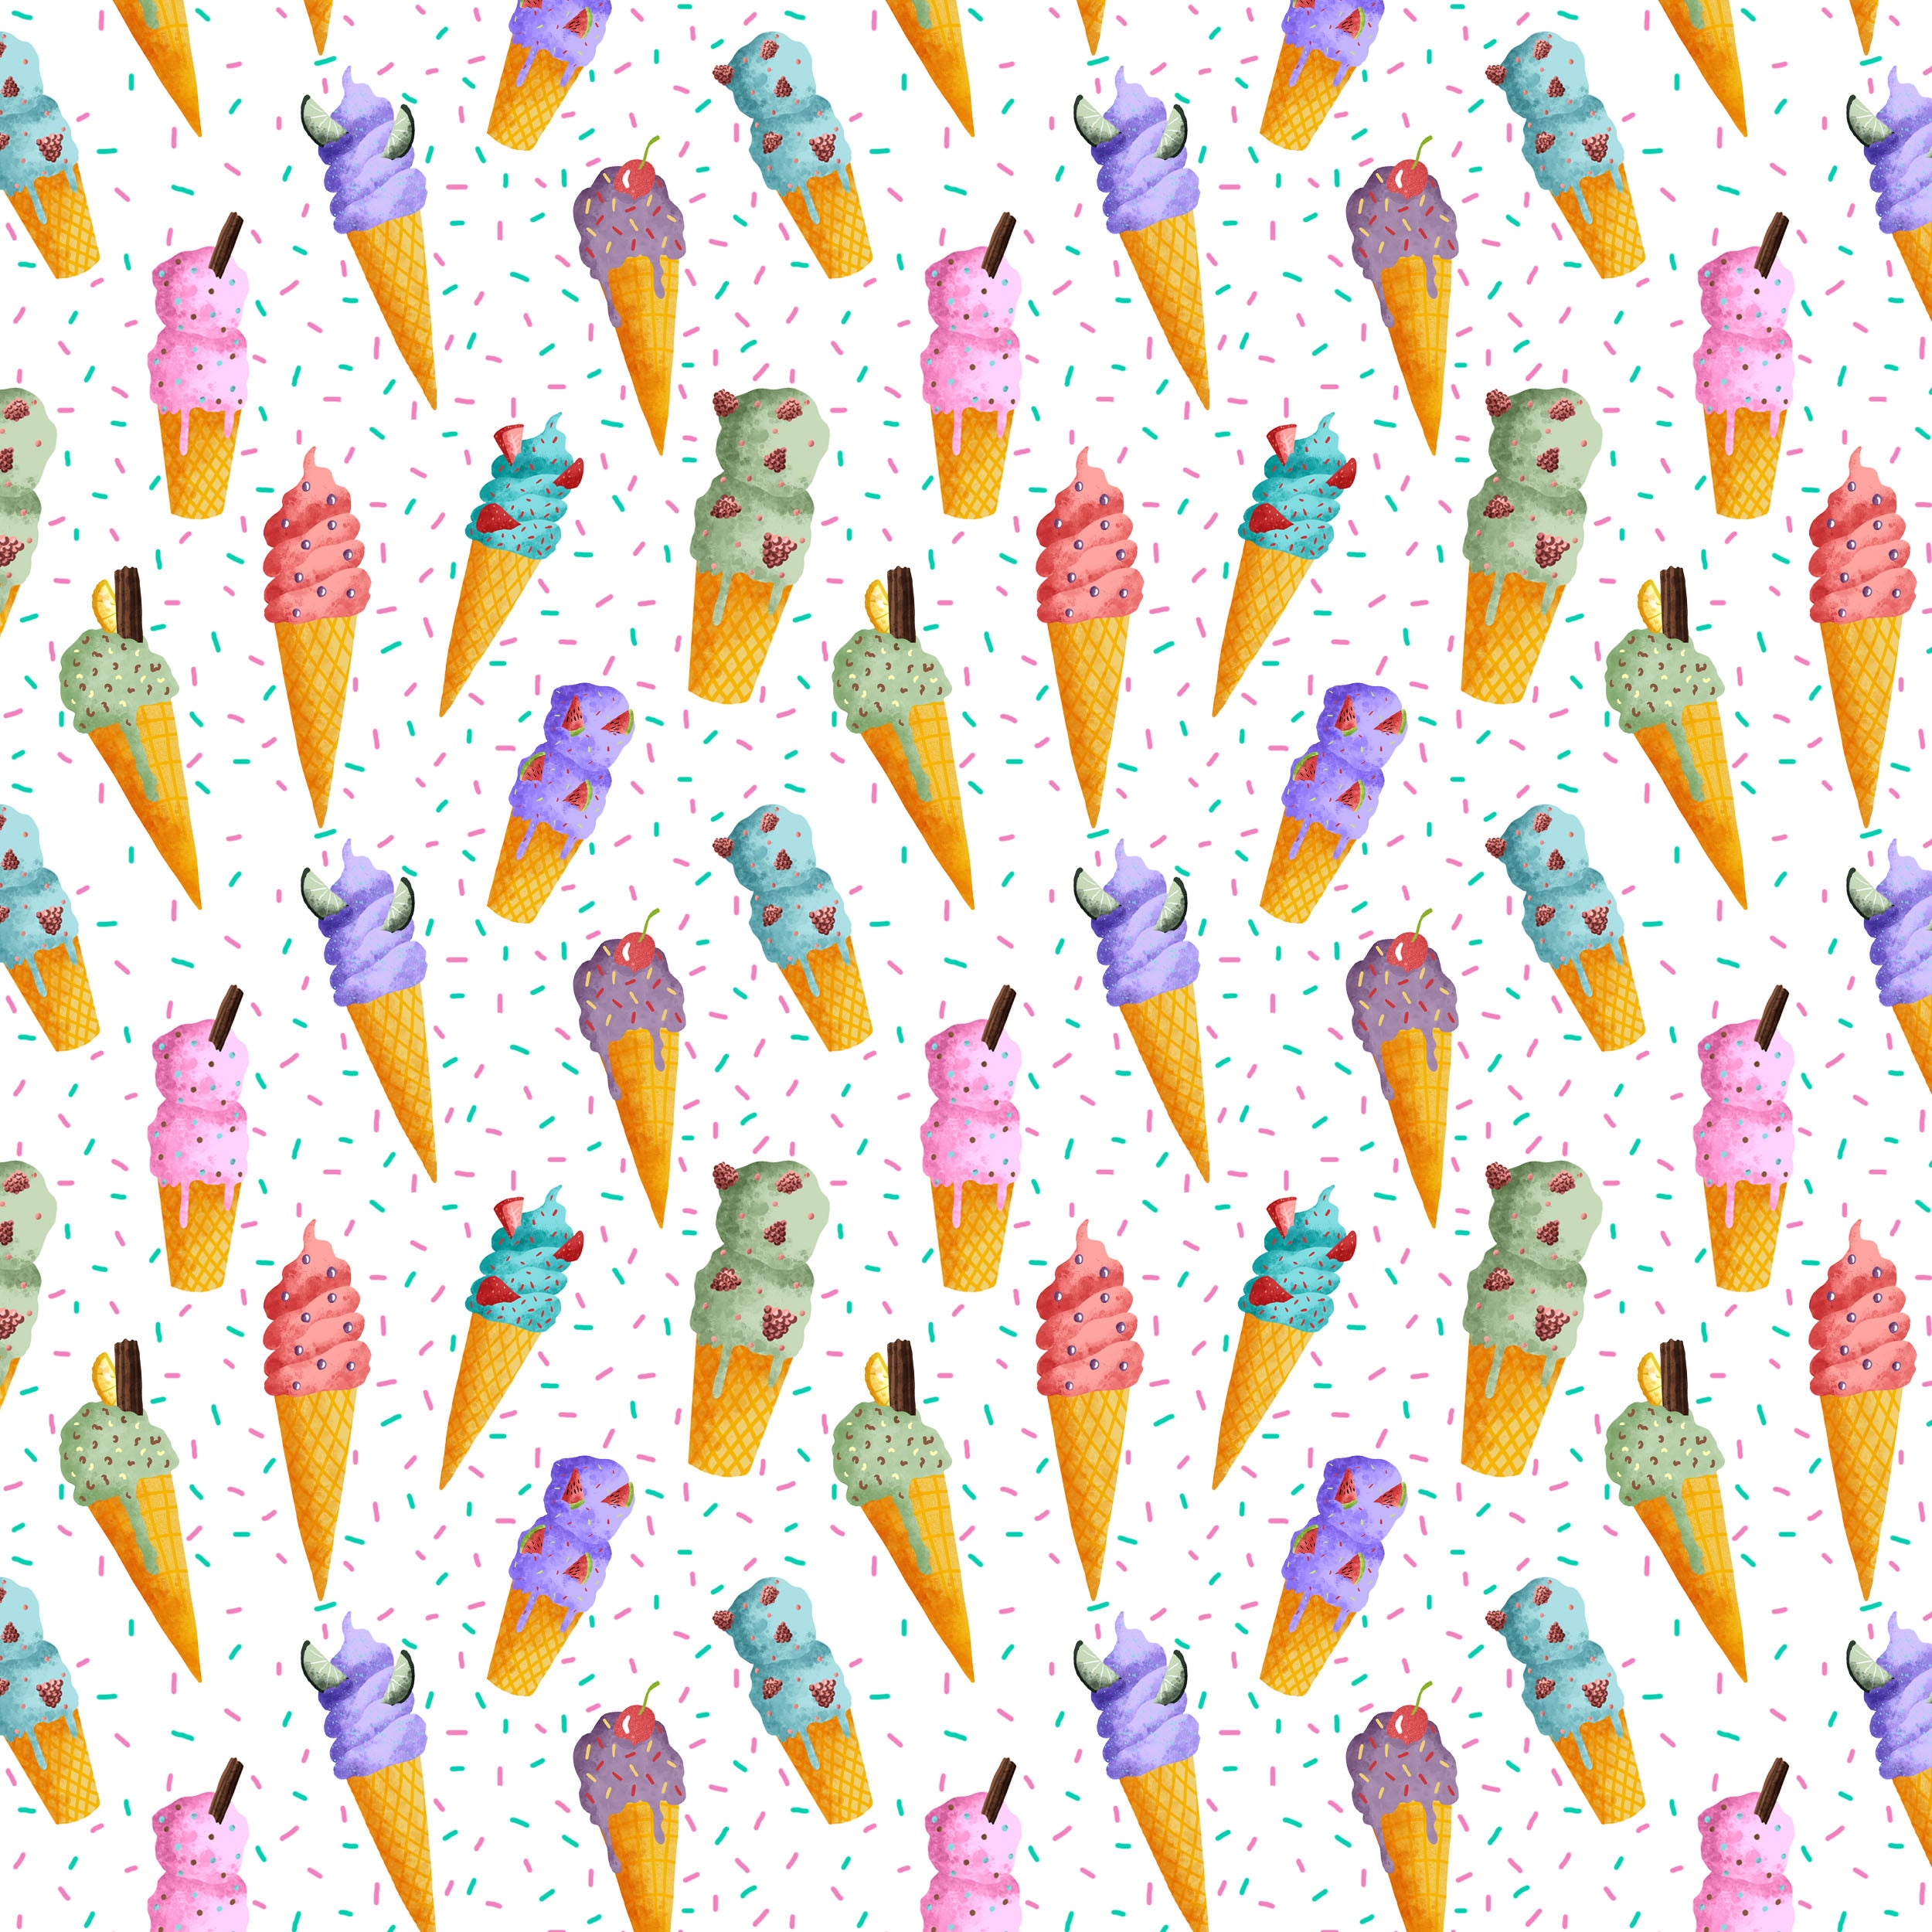 fun ice cream surface pattern design